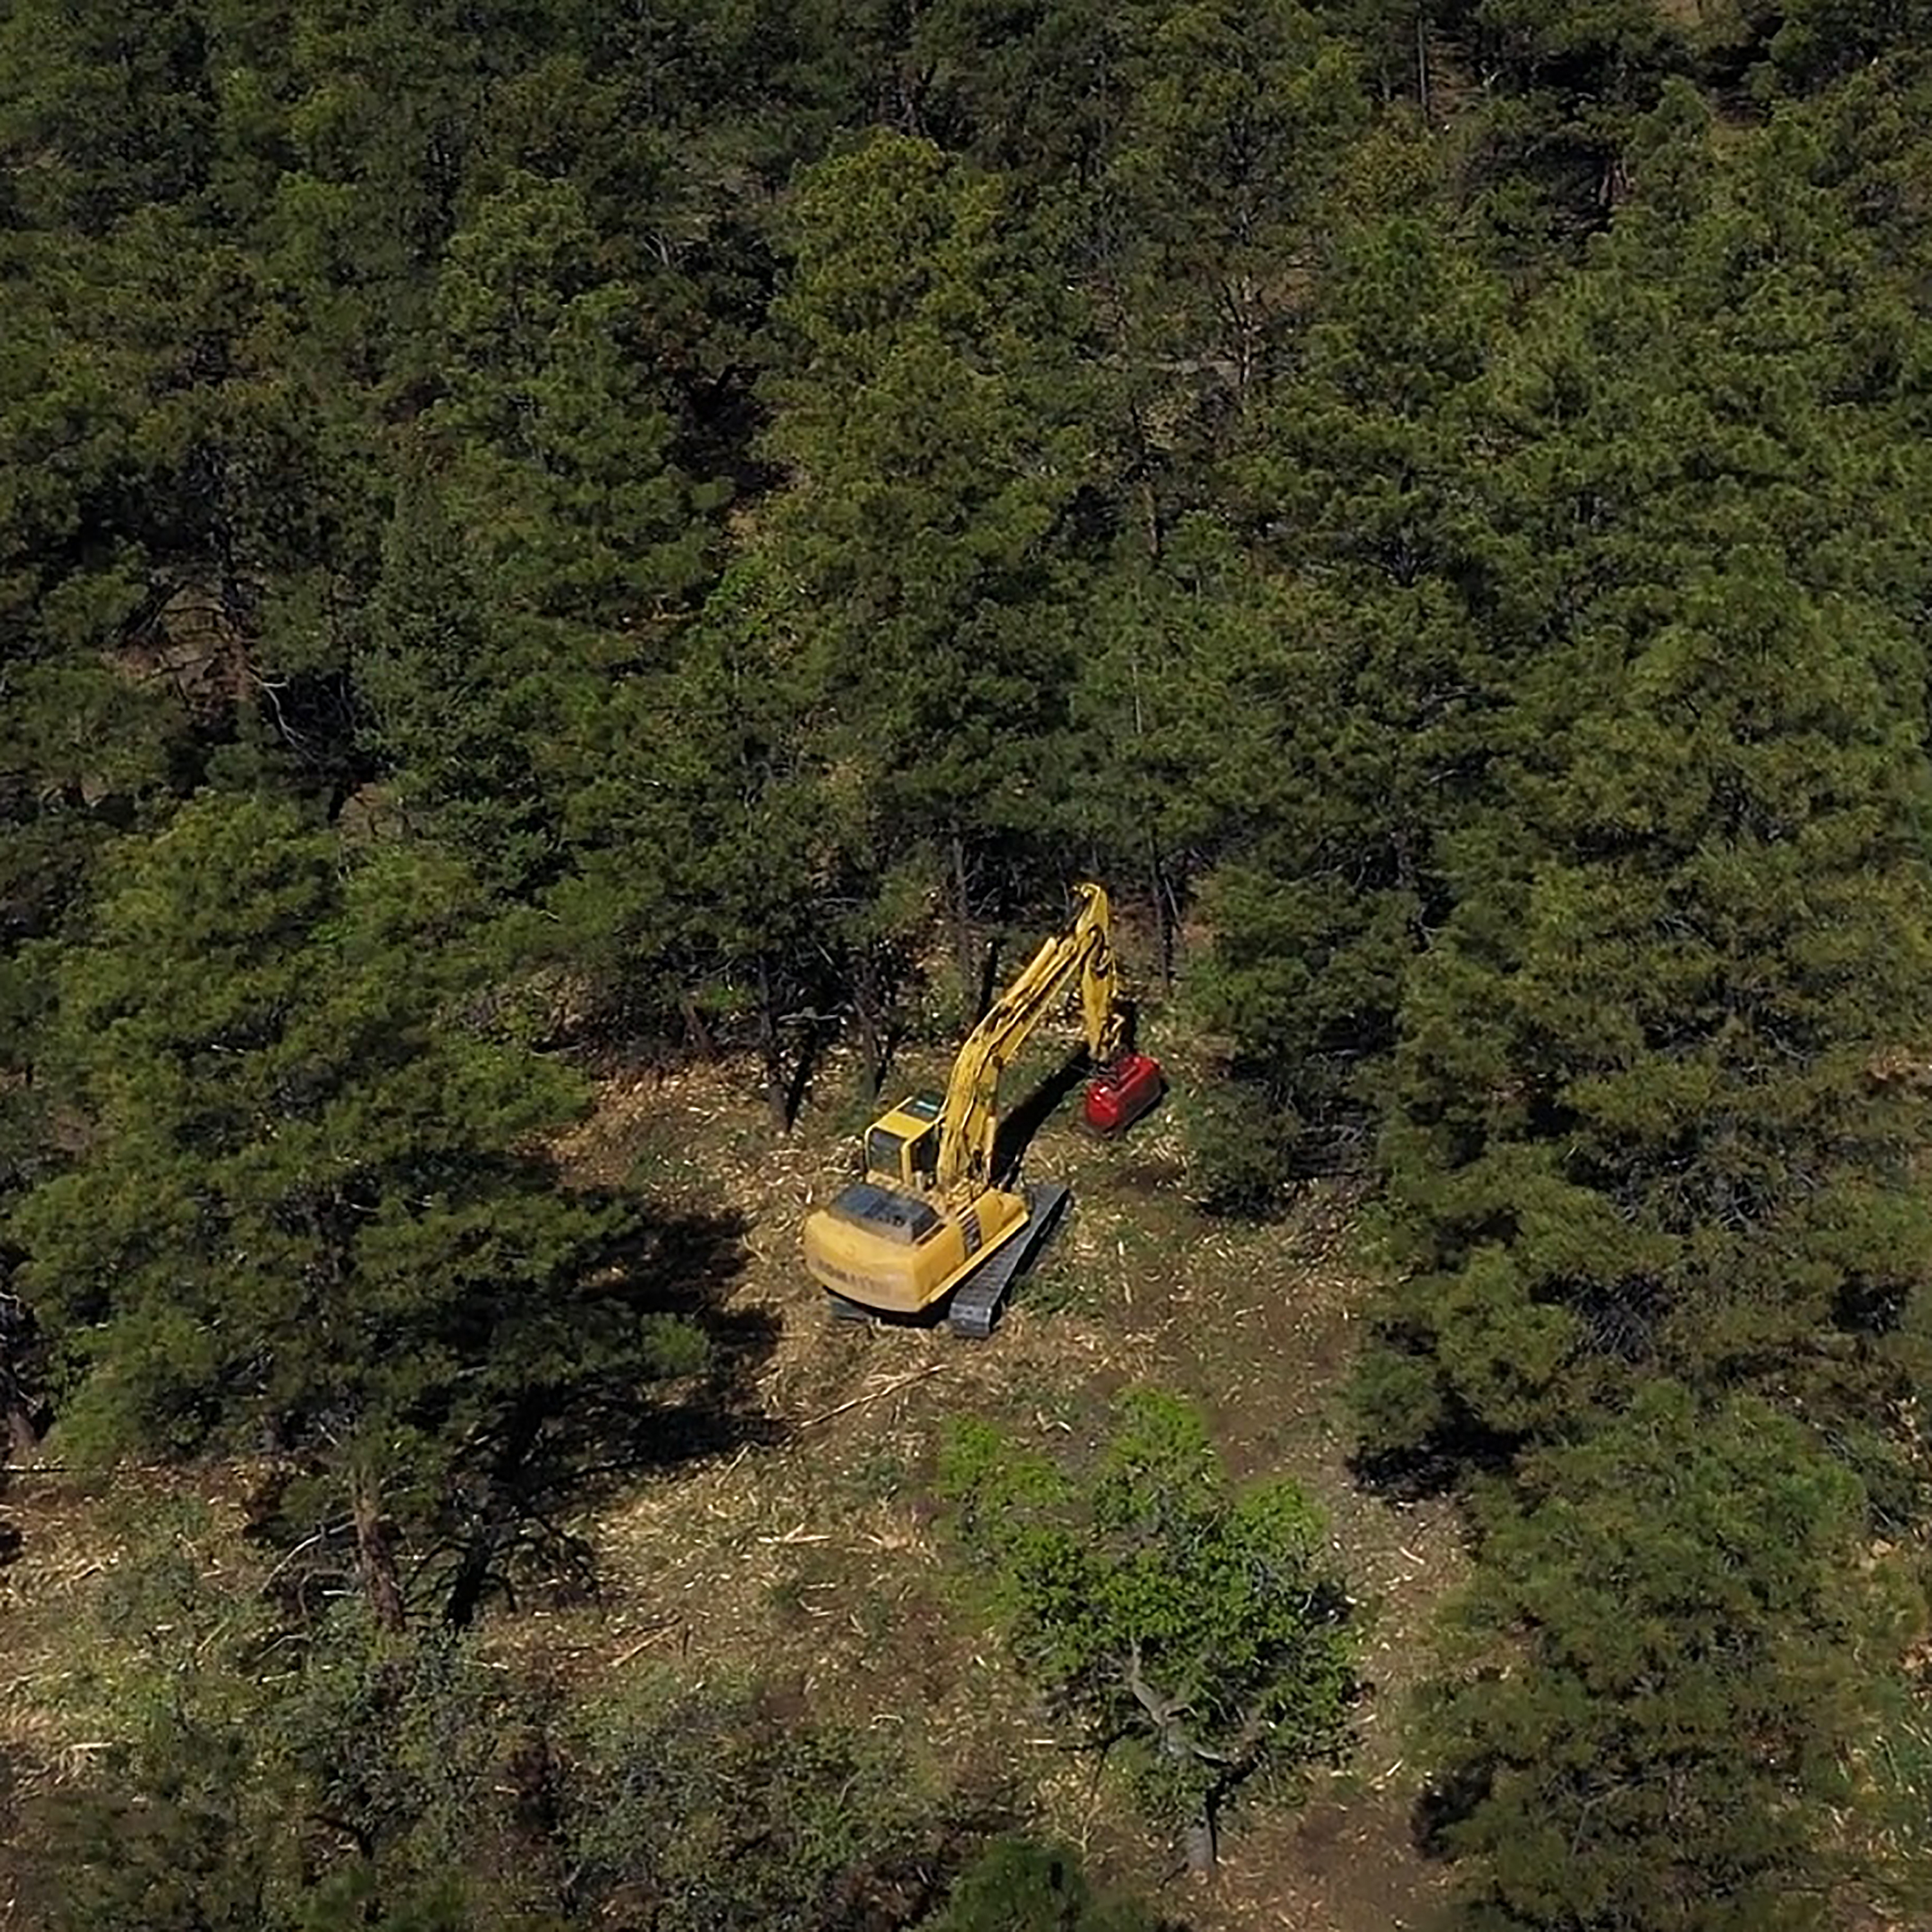 S1E19: 1.19 - Spanish Peaks Habitat Work and Forest Restoration - Aug. 30, 2021